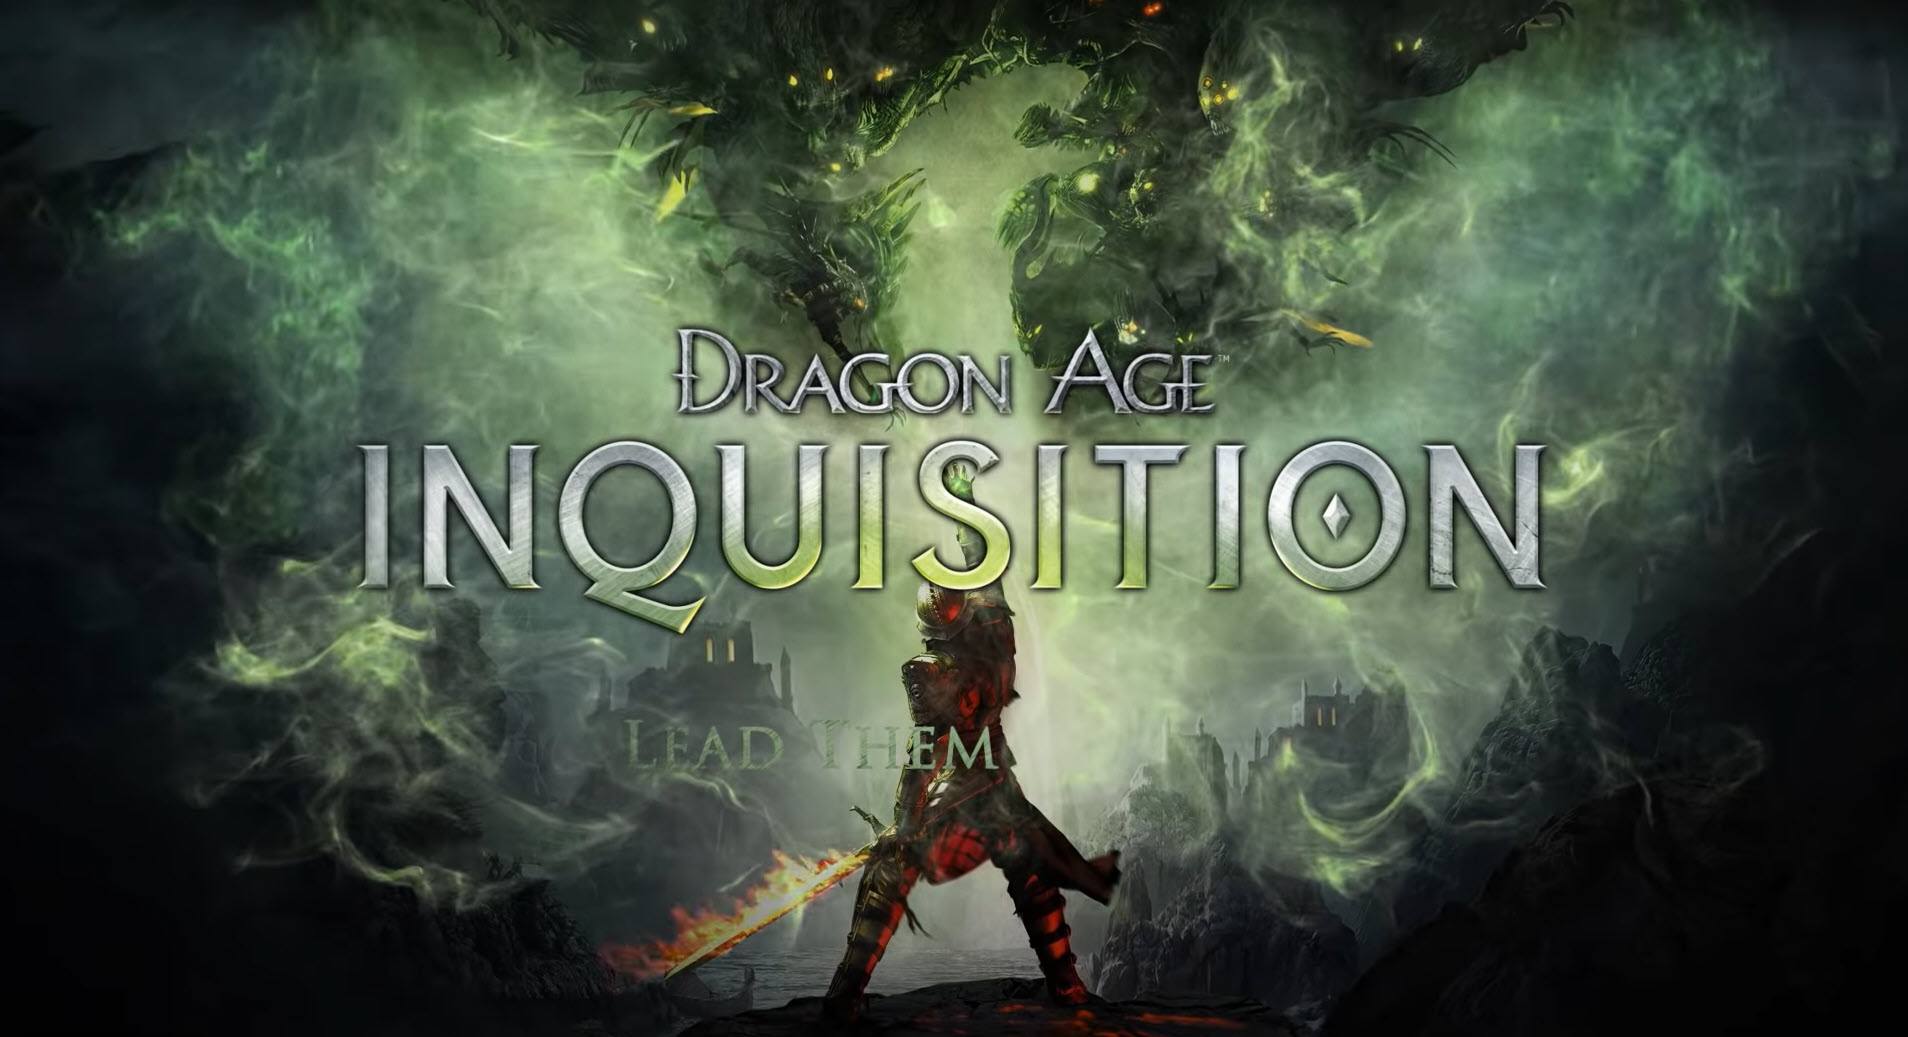 Dragon age inquisition won't launch origin: How to fix?